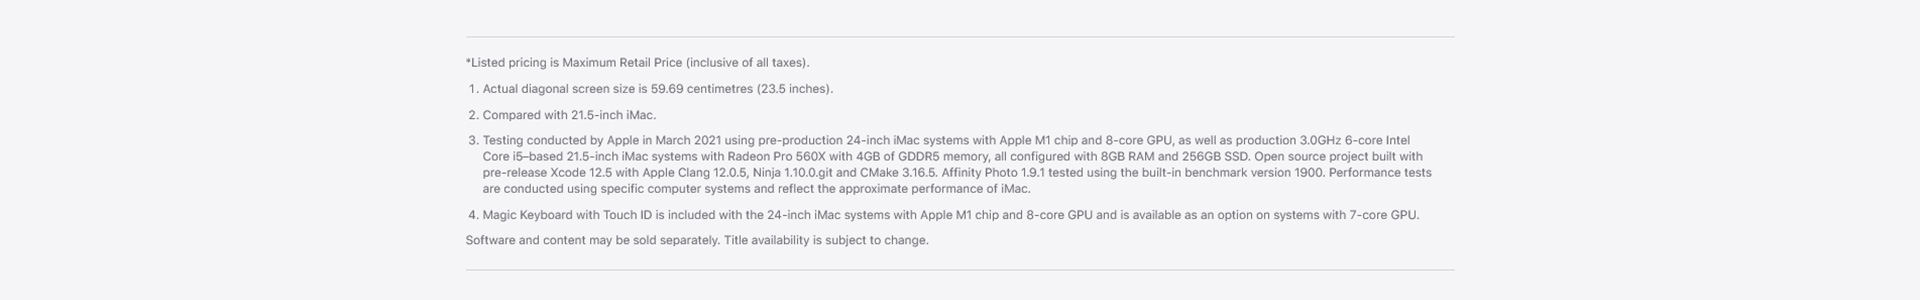 Apple iMac 24 inch